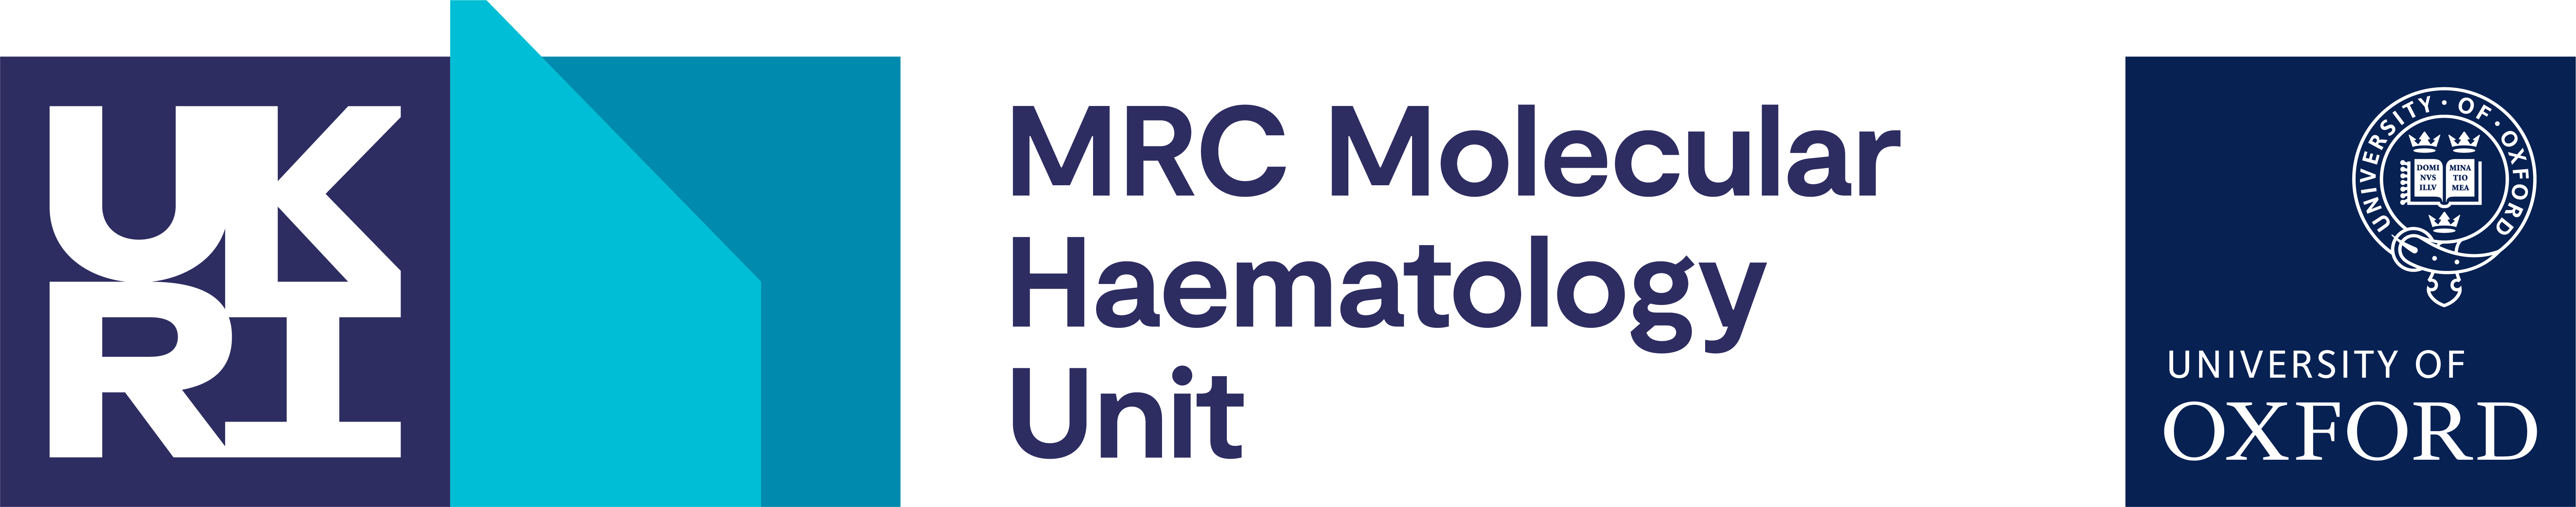 MRC MHU logo